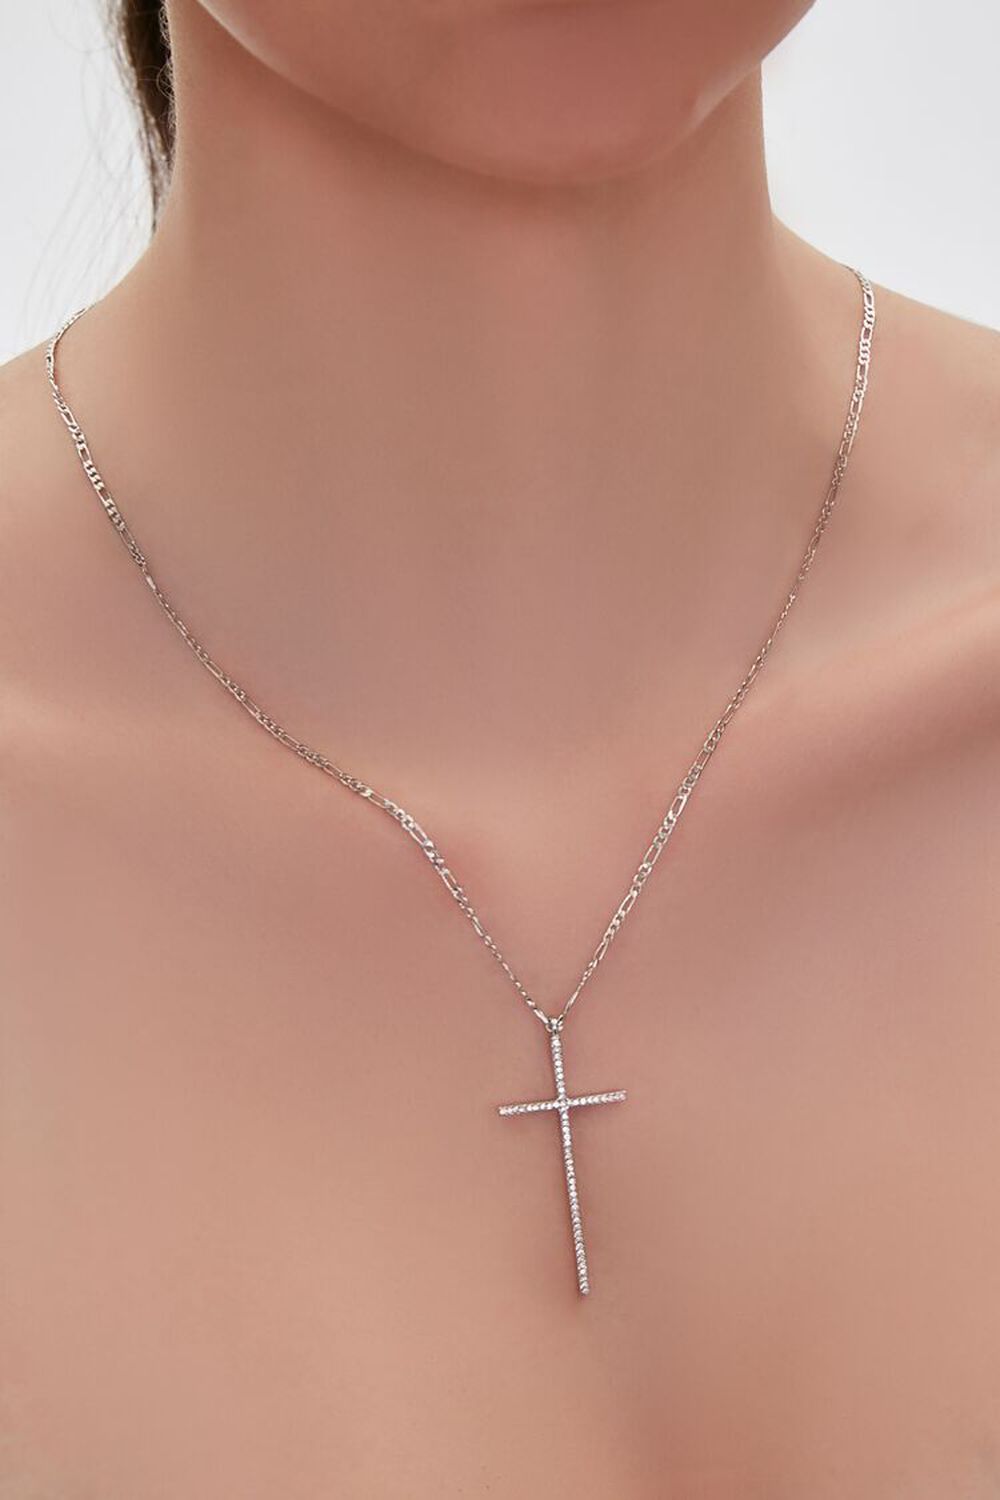 SILVER Rhinestone Cross Necklace, image 1